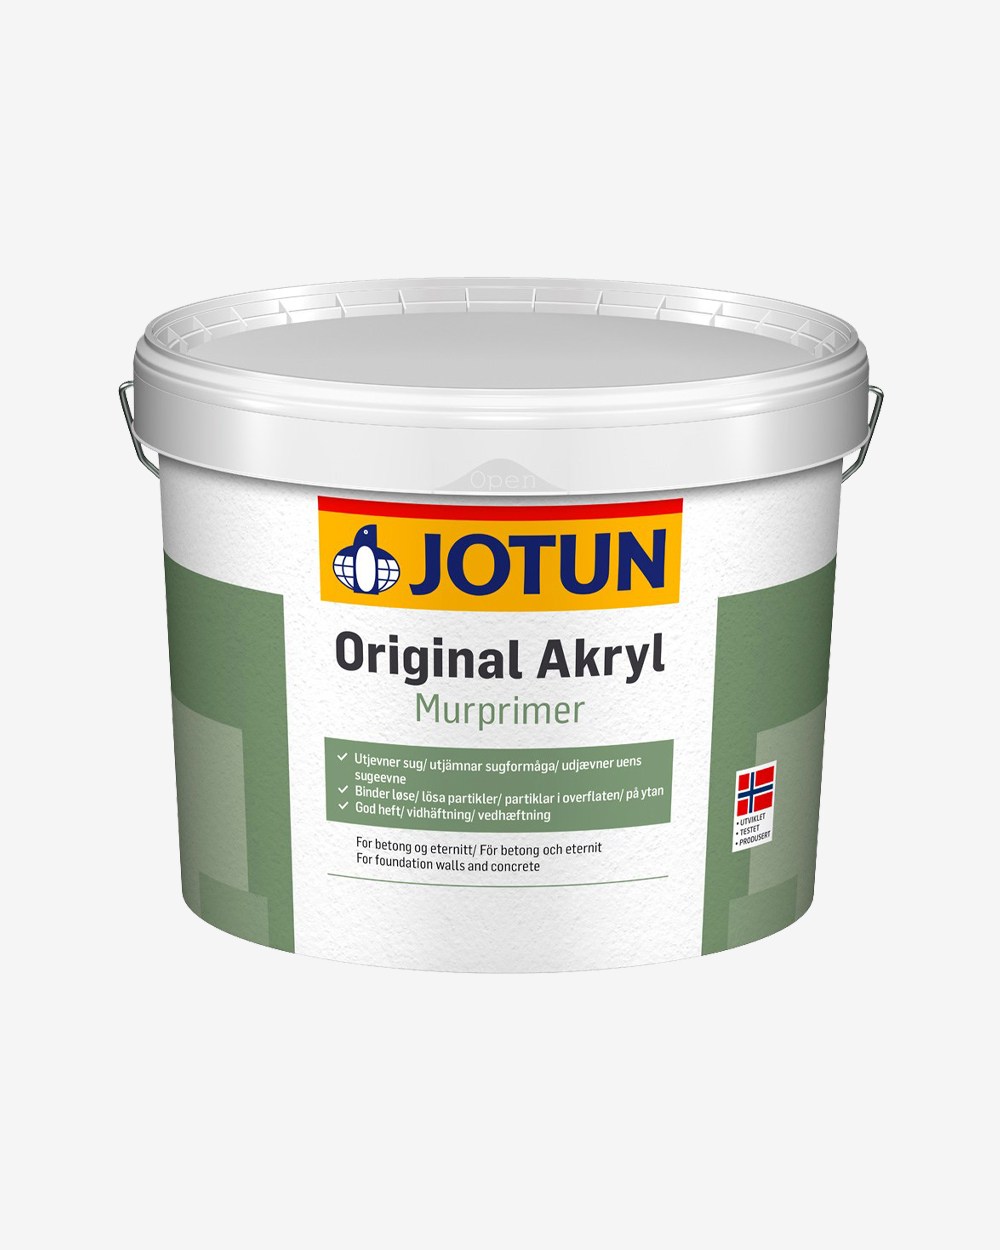 Se Jotun Original Akryl murprimer - Facadegrunder 3 L hos Picment.dk